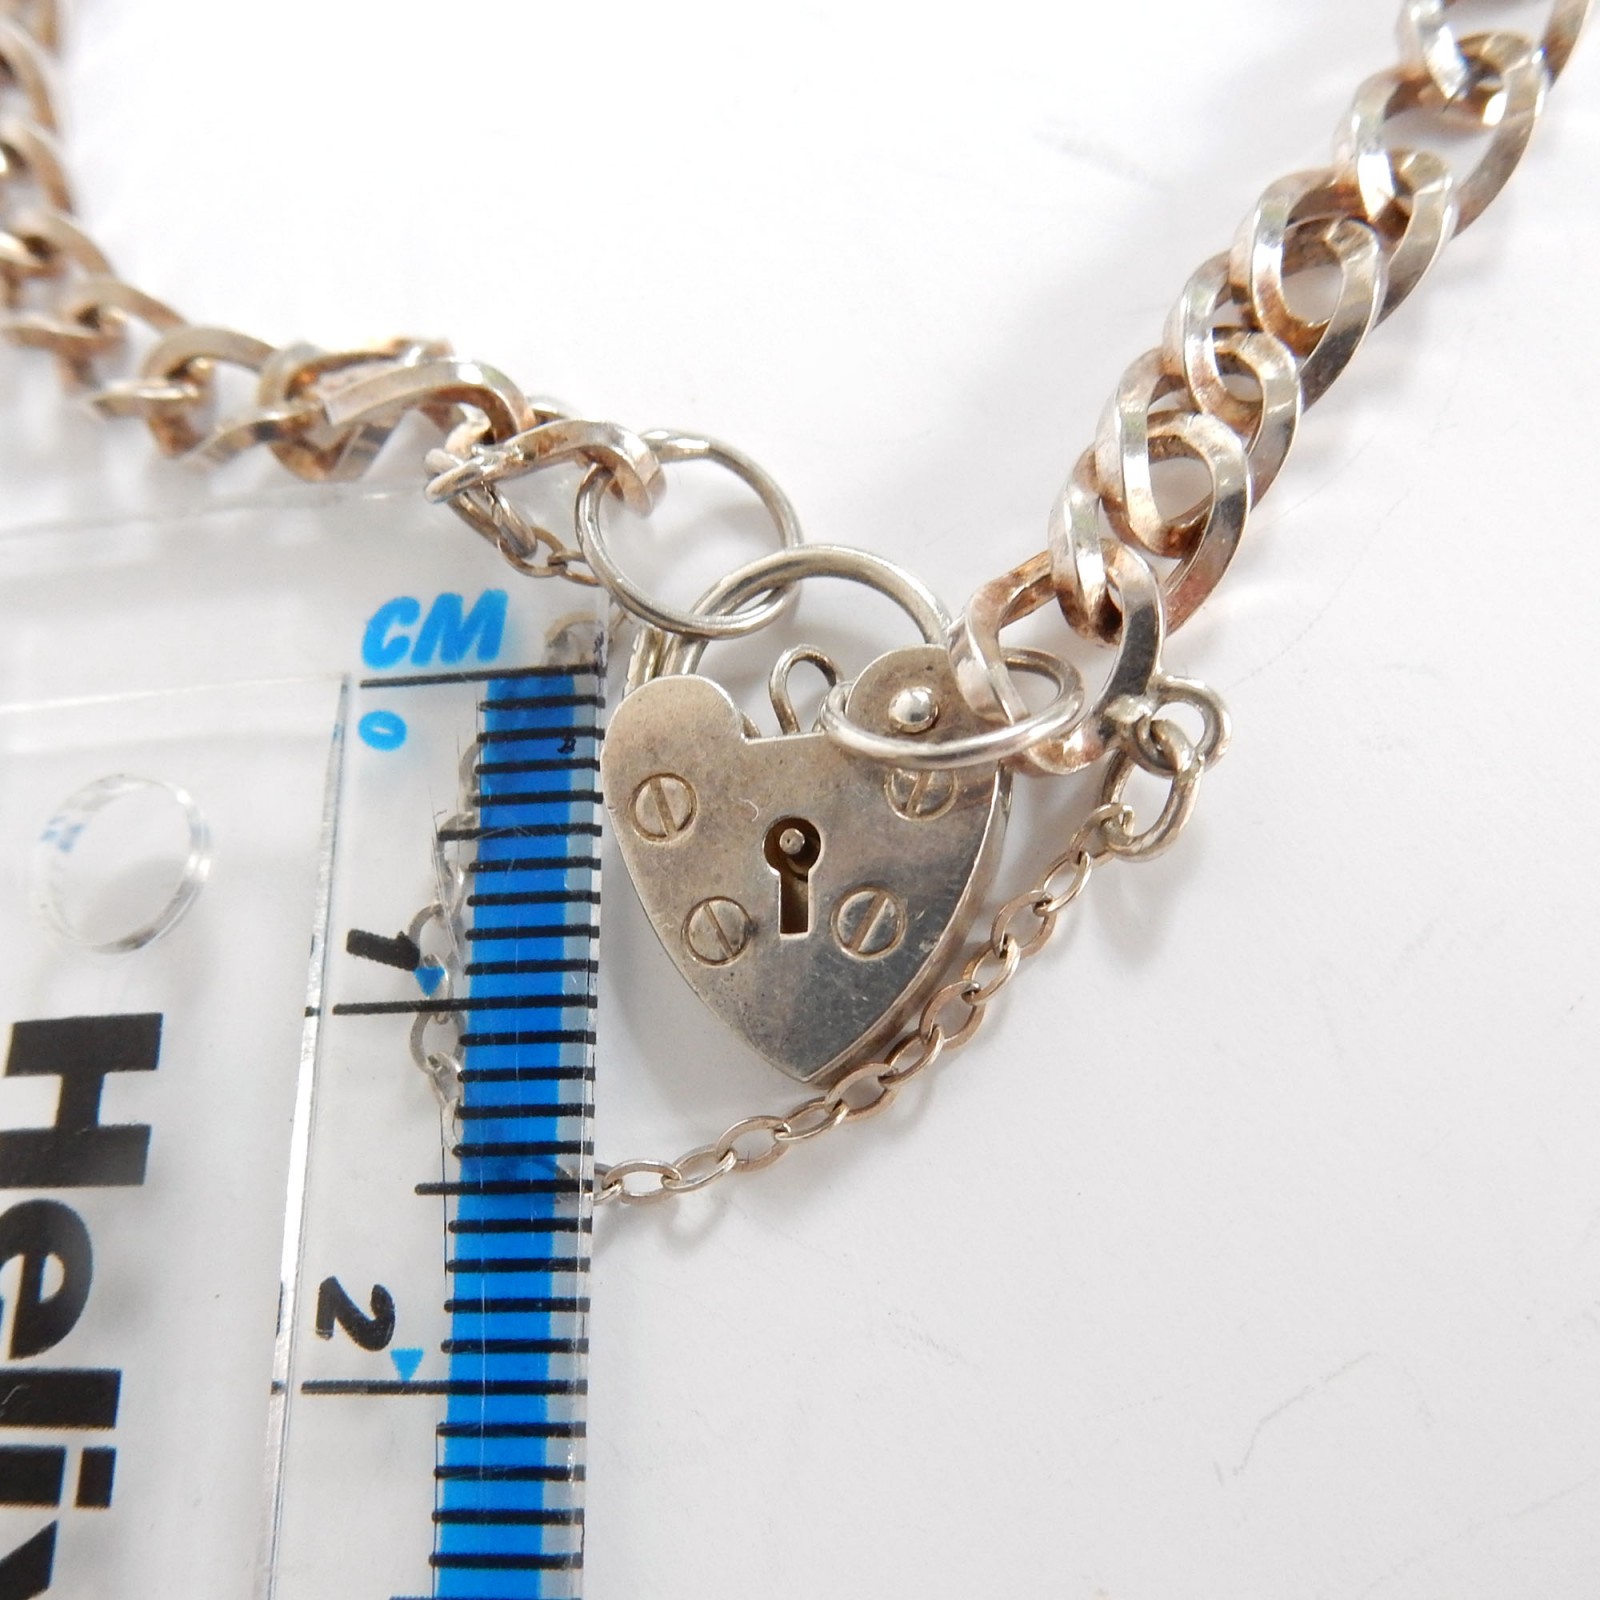 Buy Sterling Silver Heart Charm Bracelet  Universal Medical ID